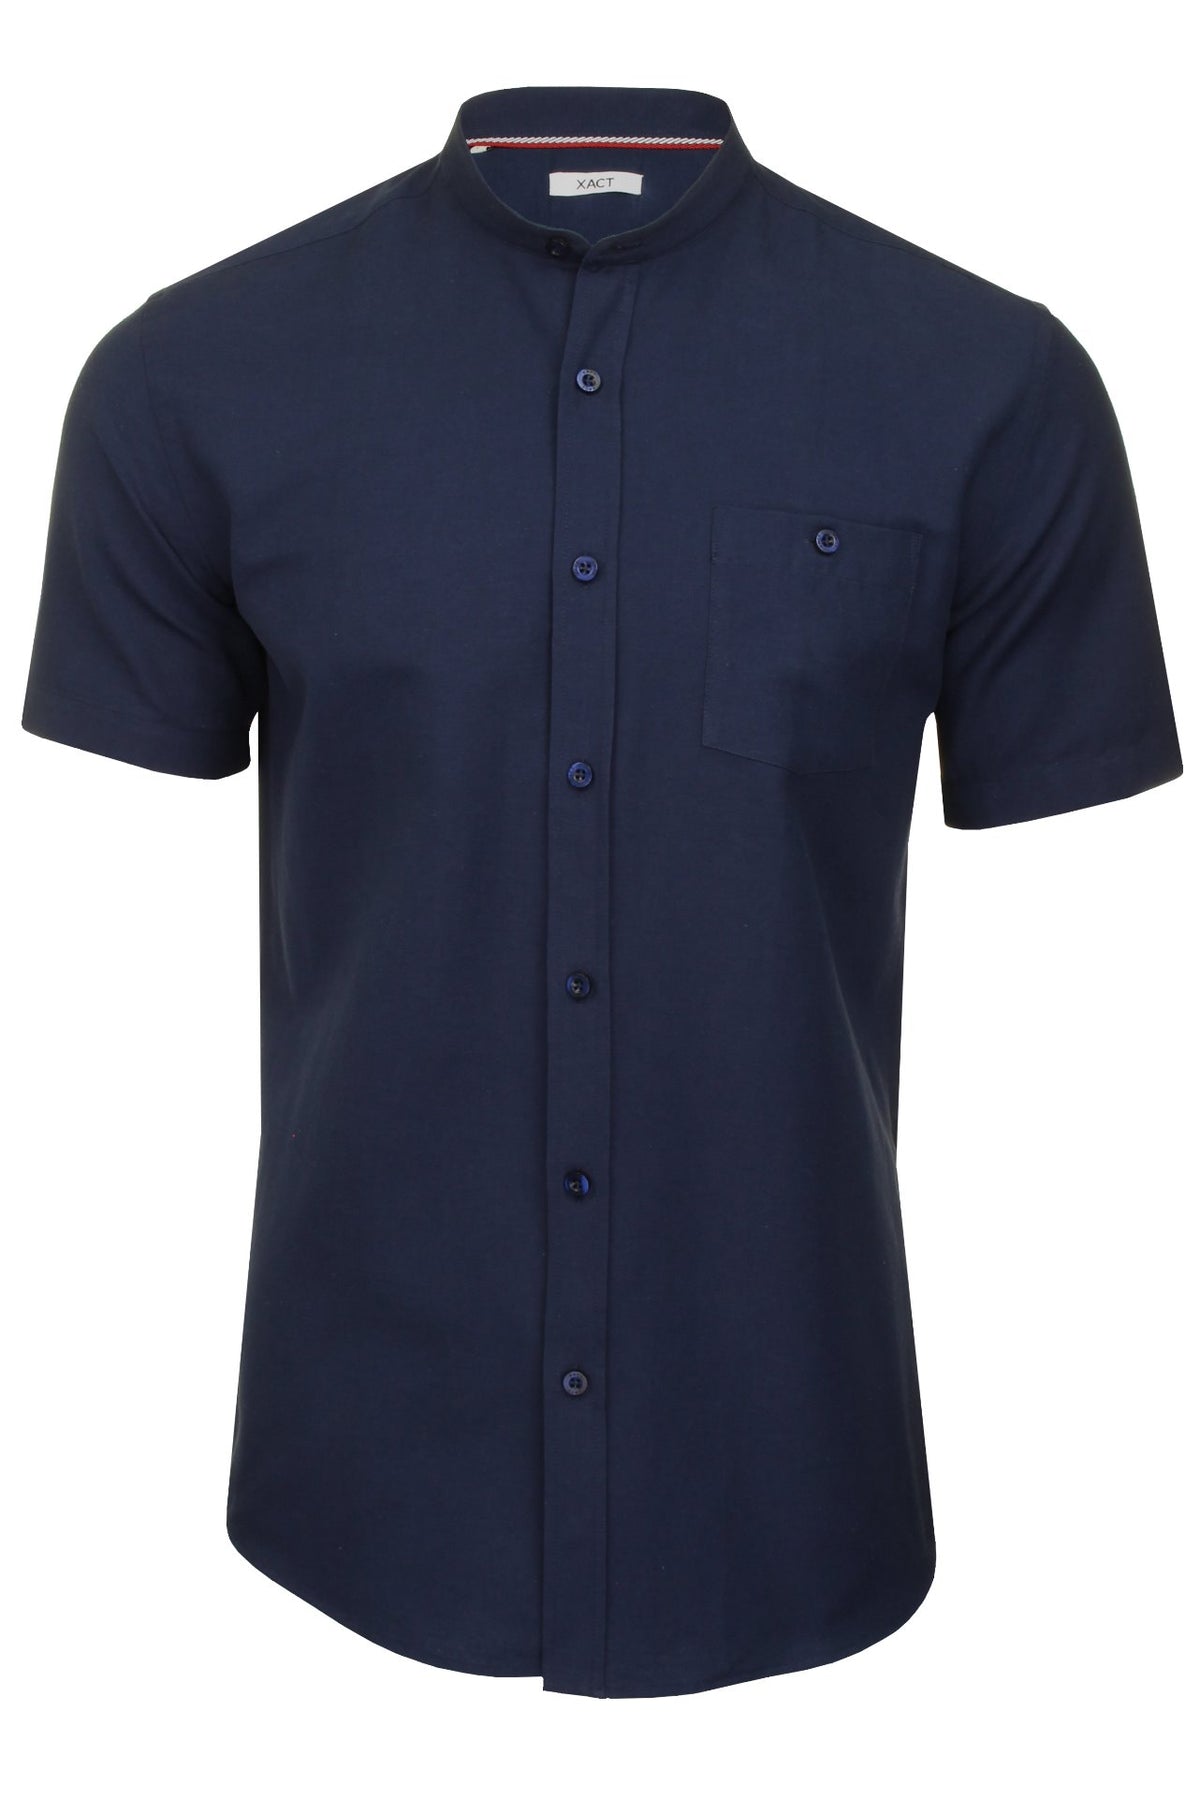 Xact Men's Grandad Collar Oxford Shirt Slim Fit Short Sleeved, 01, Xsh1022, Dark Navy